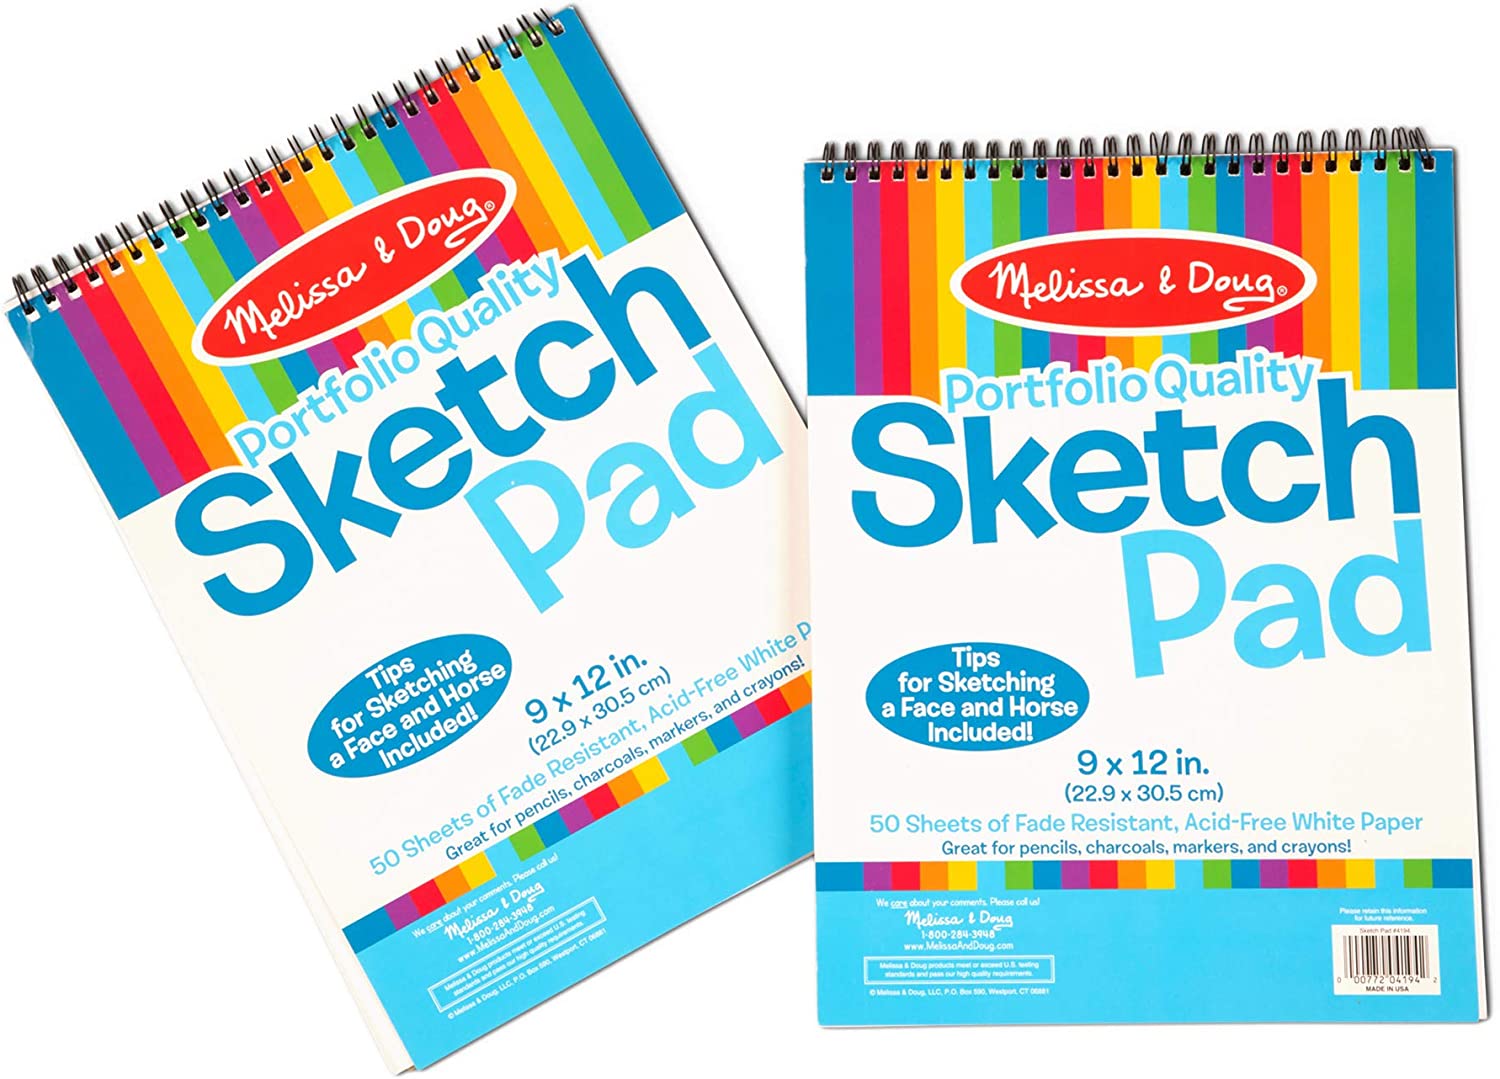 iBayam 78-Pack Drawing Set Sketching Kit Pro Art Supplies with 75